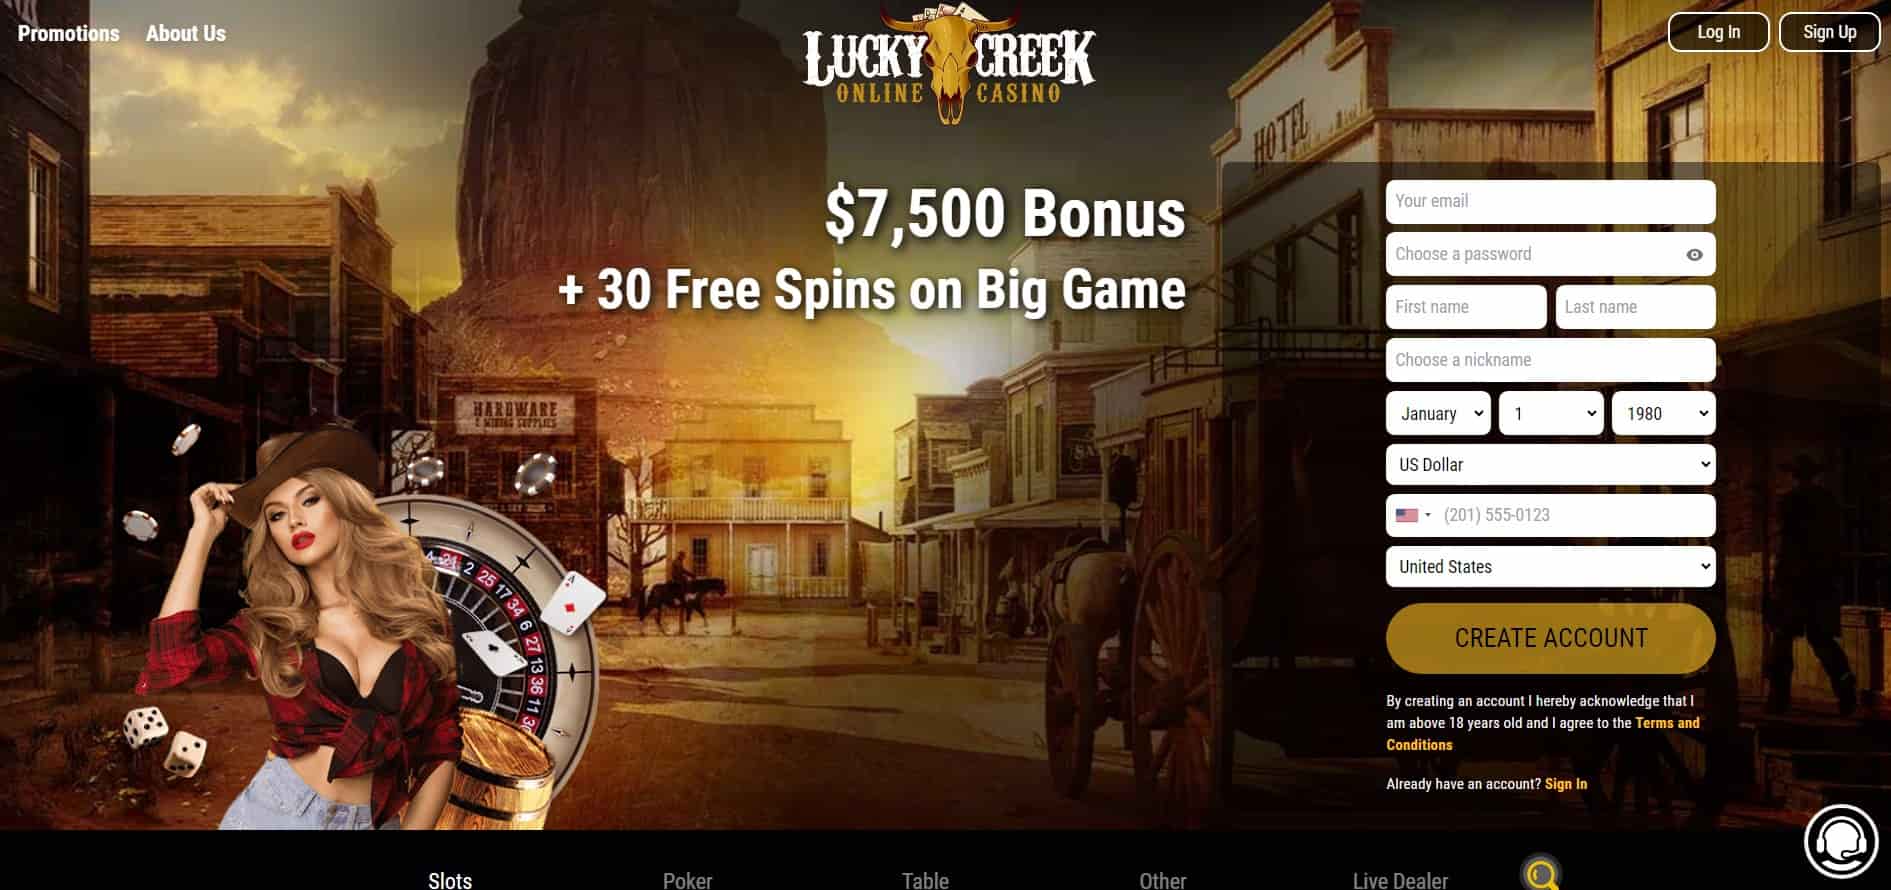 lucky creek casino homepage New JErsey